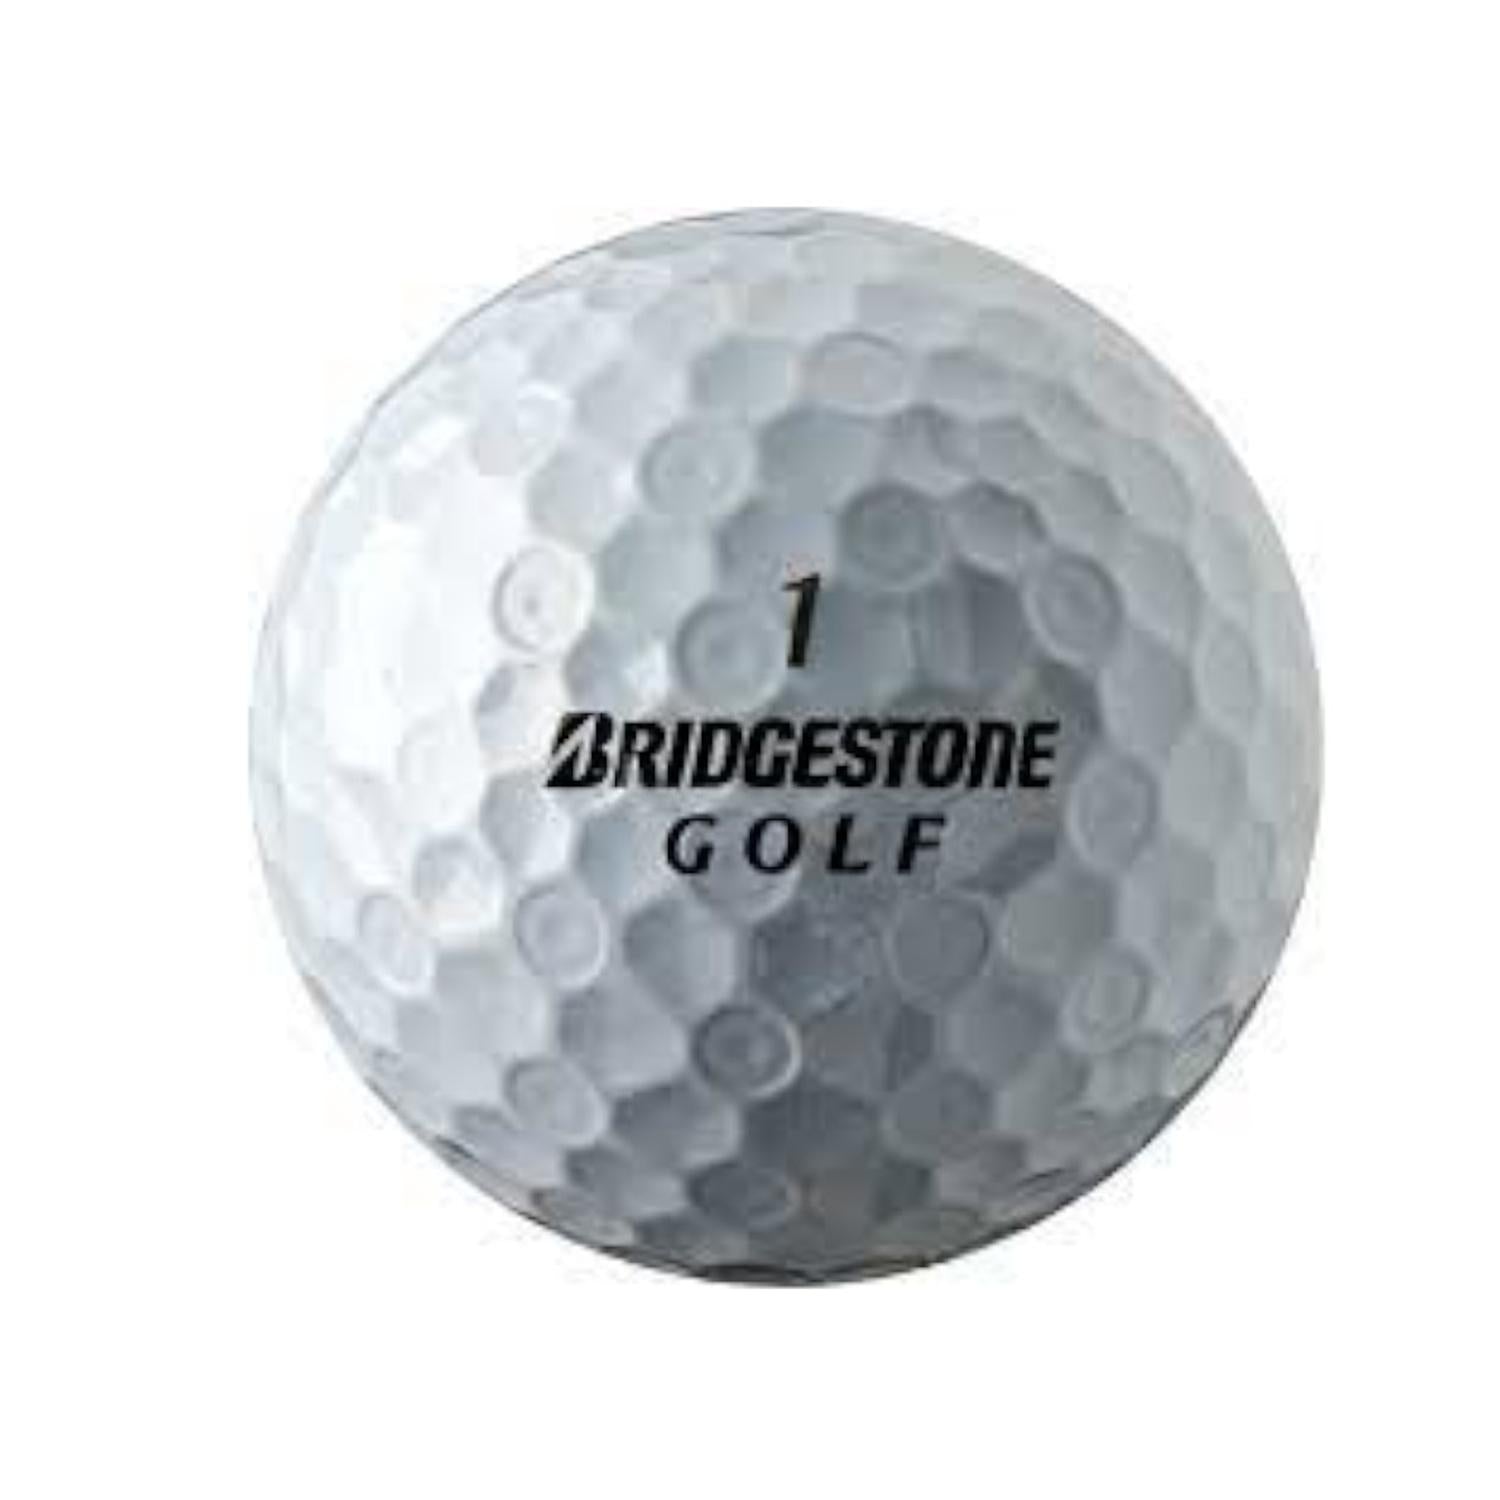 Bridgestone Golf Practice